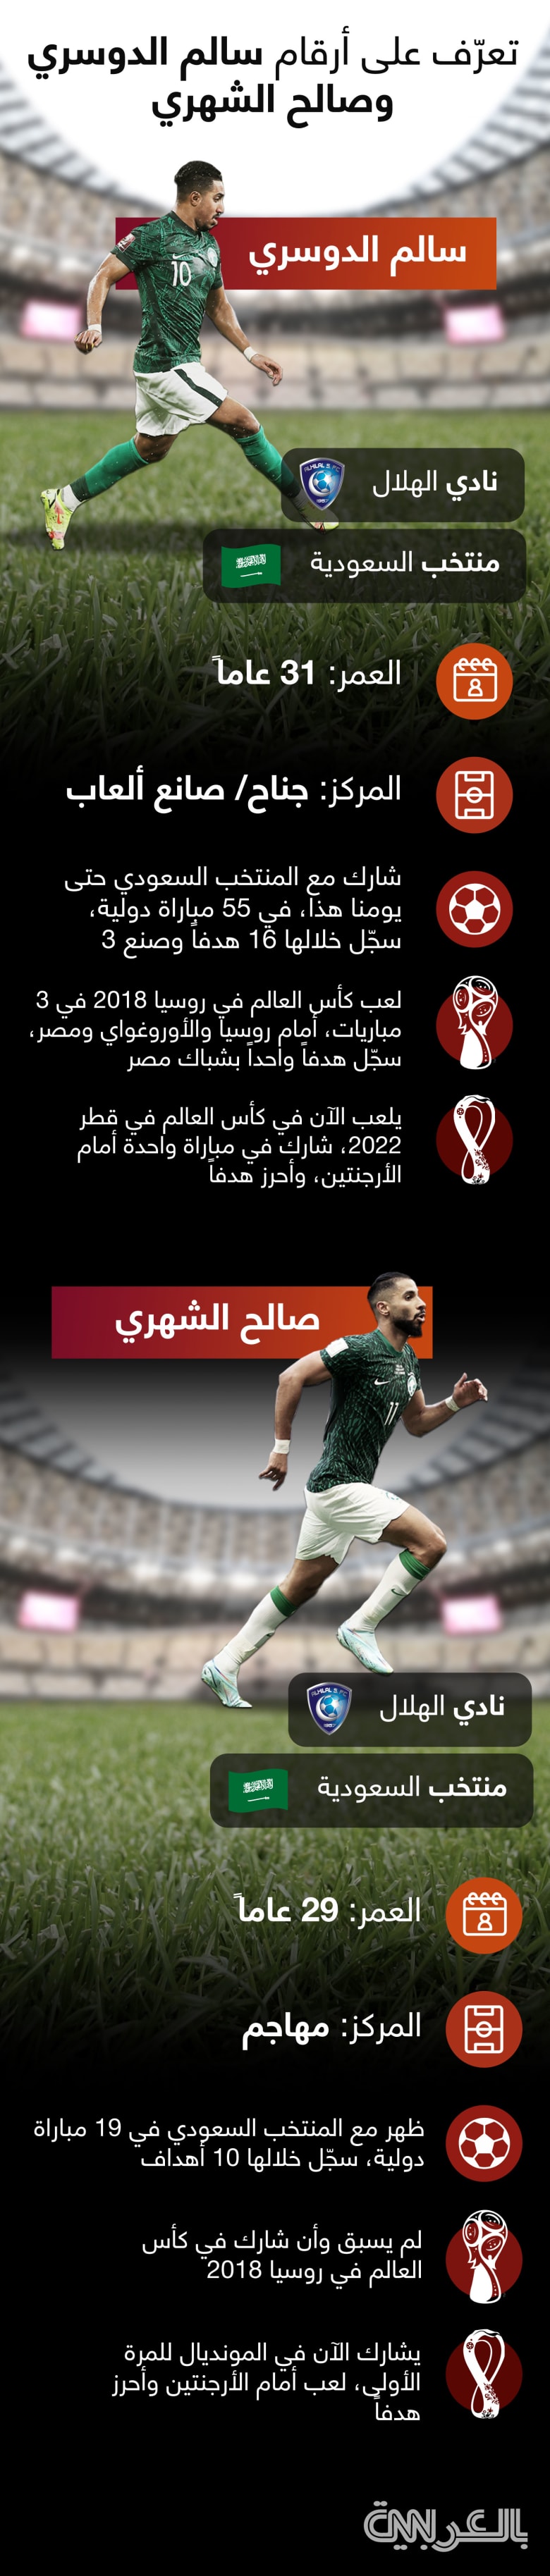 saudi-players-info